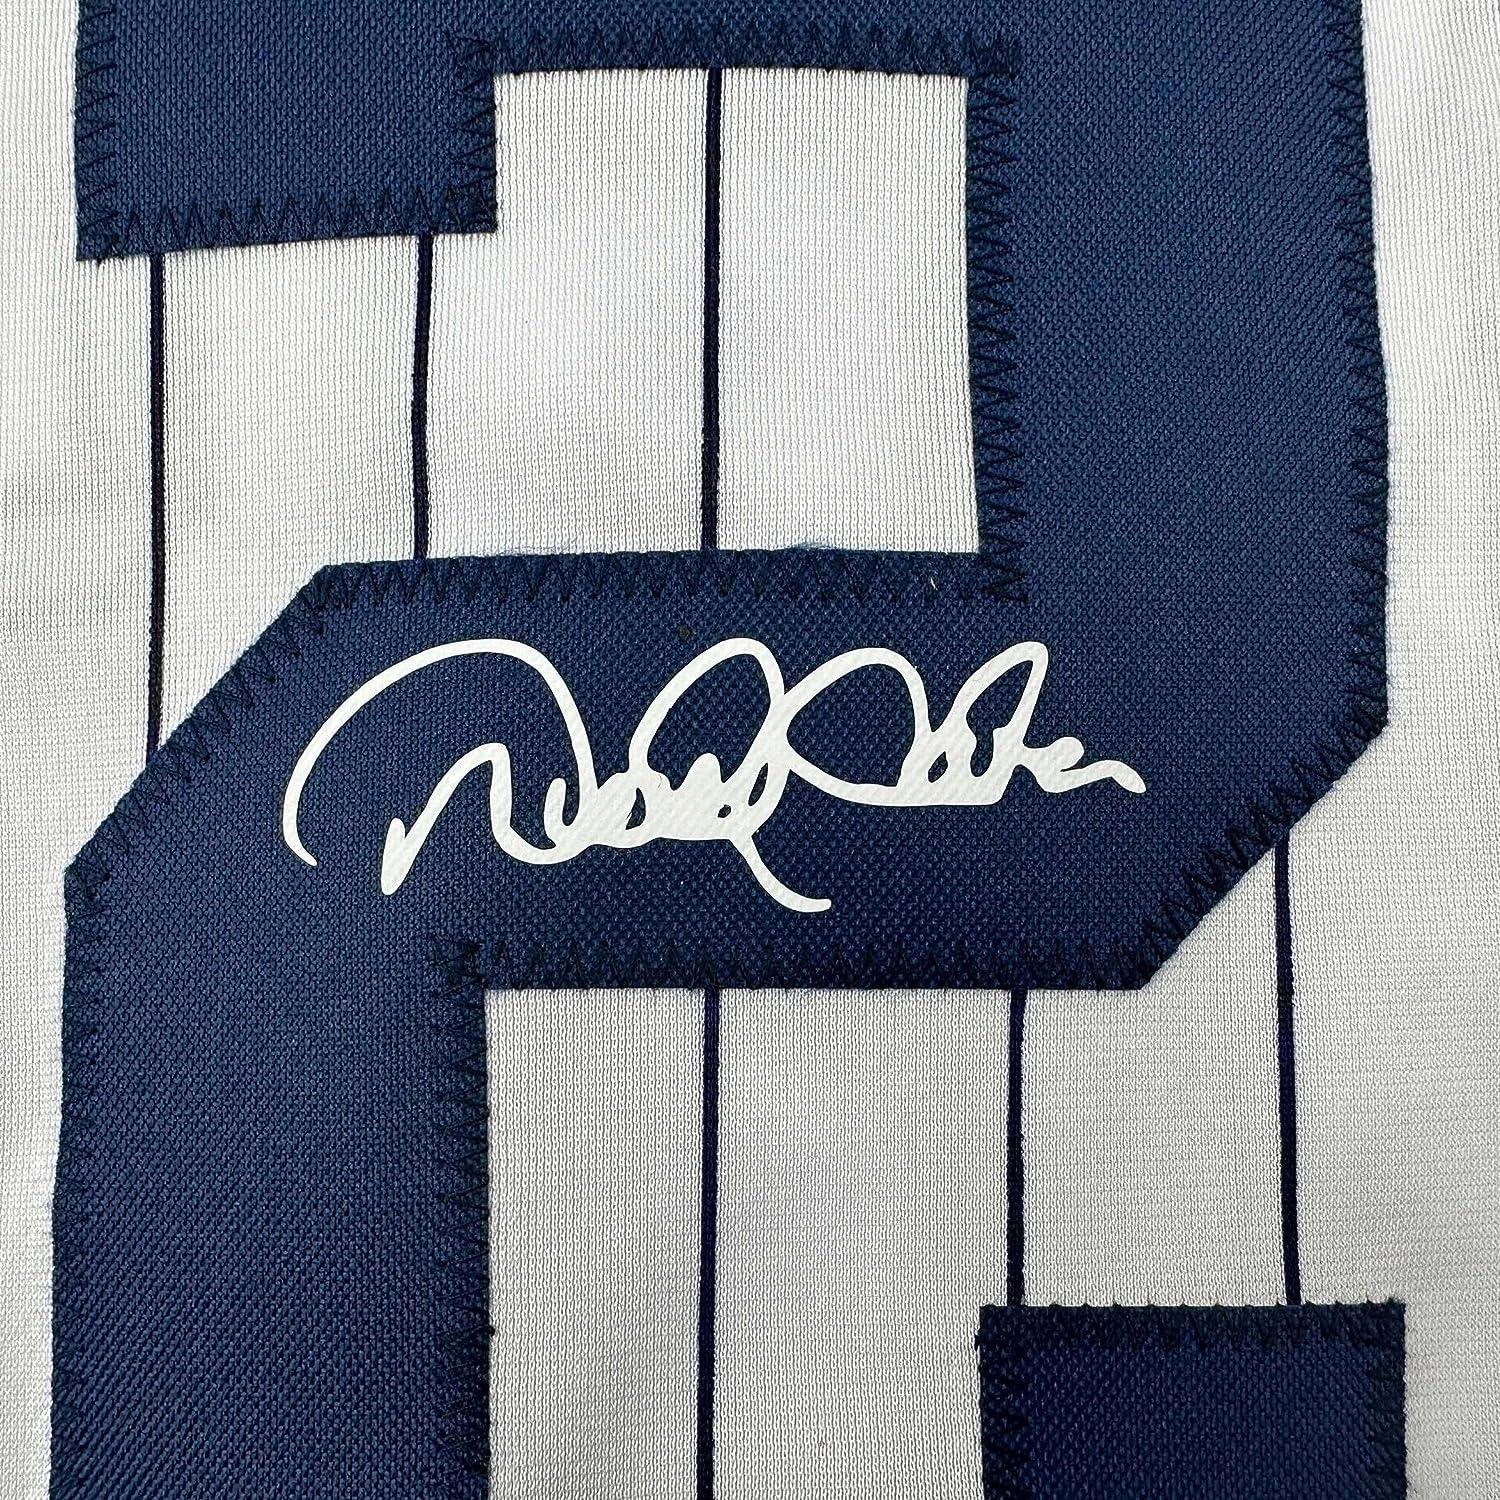 Facsimile Autographed Derek Jeter New York Pinstripe Reprint Laser Auto  Baseball Jersey Size Men's XL